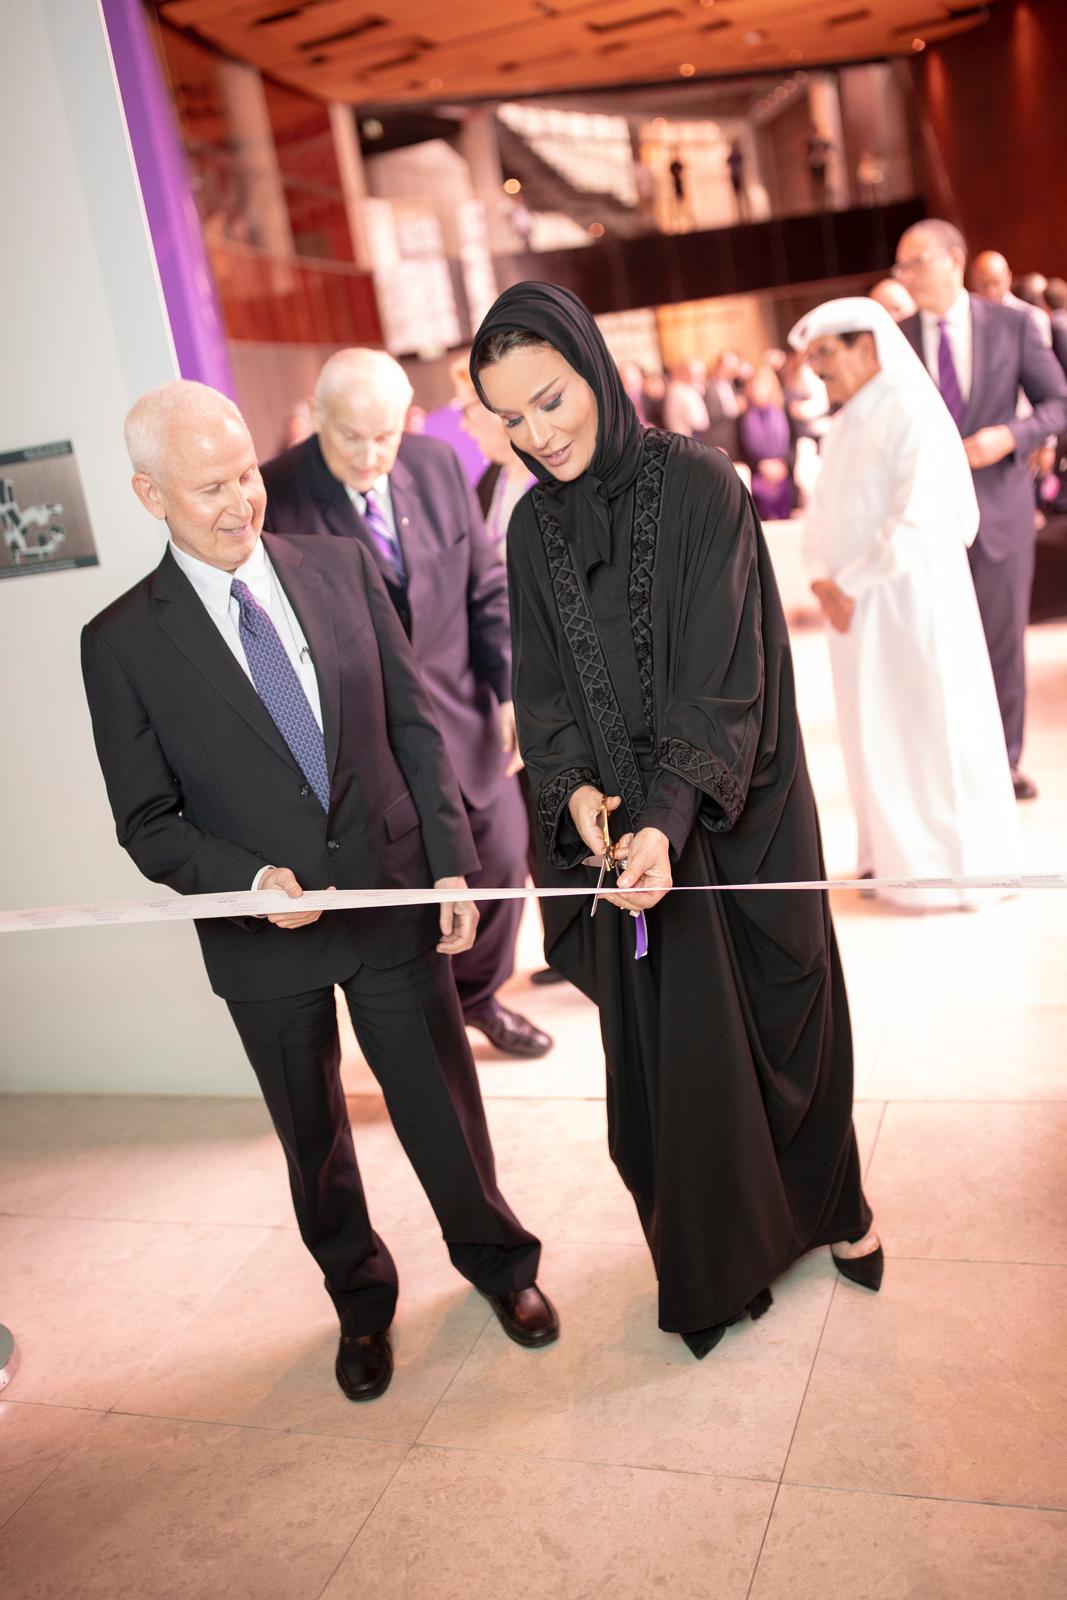 Her Highness Sheikha Moza bint Nasser joins Northwestern University President Morton Schapiro in cutting the ribbon to dedicate The Media Majlis at Northwestern University in Qatar